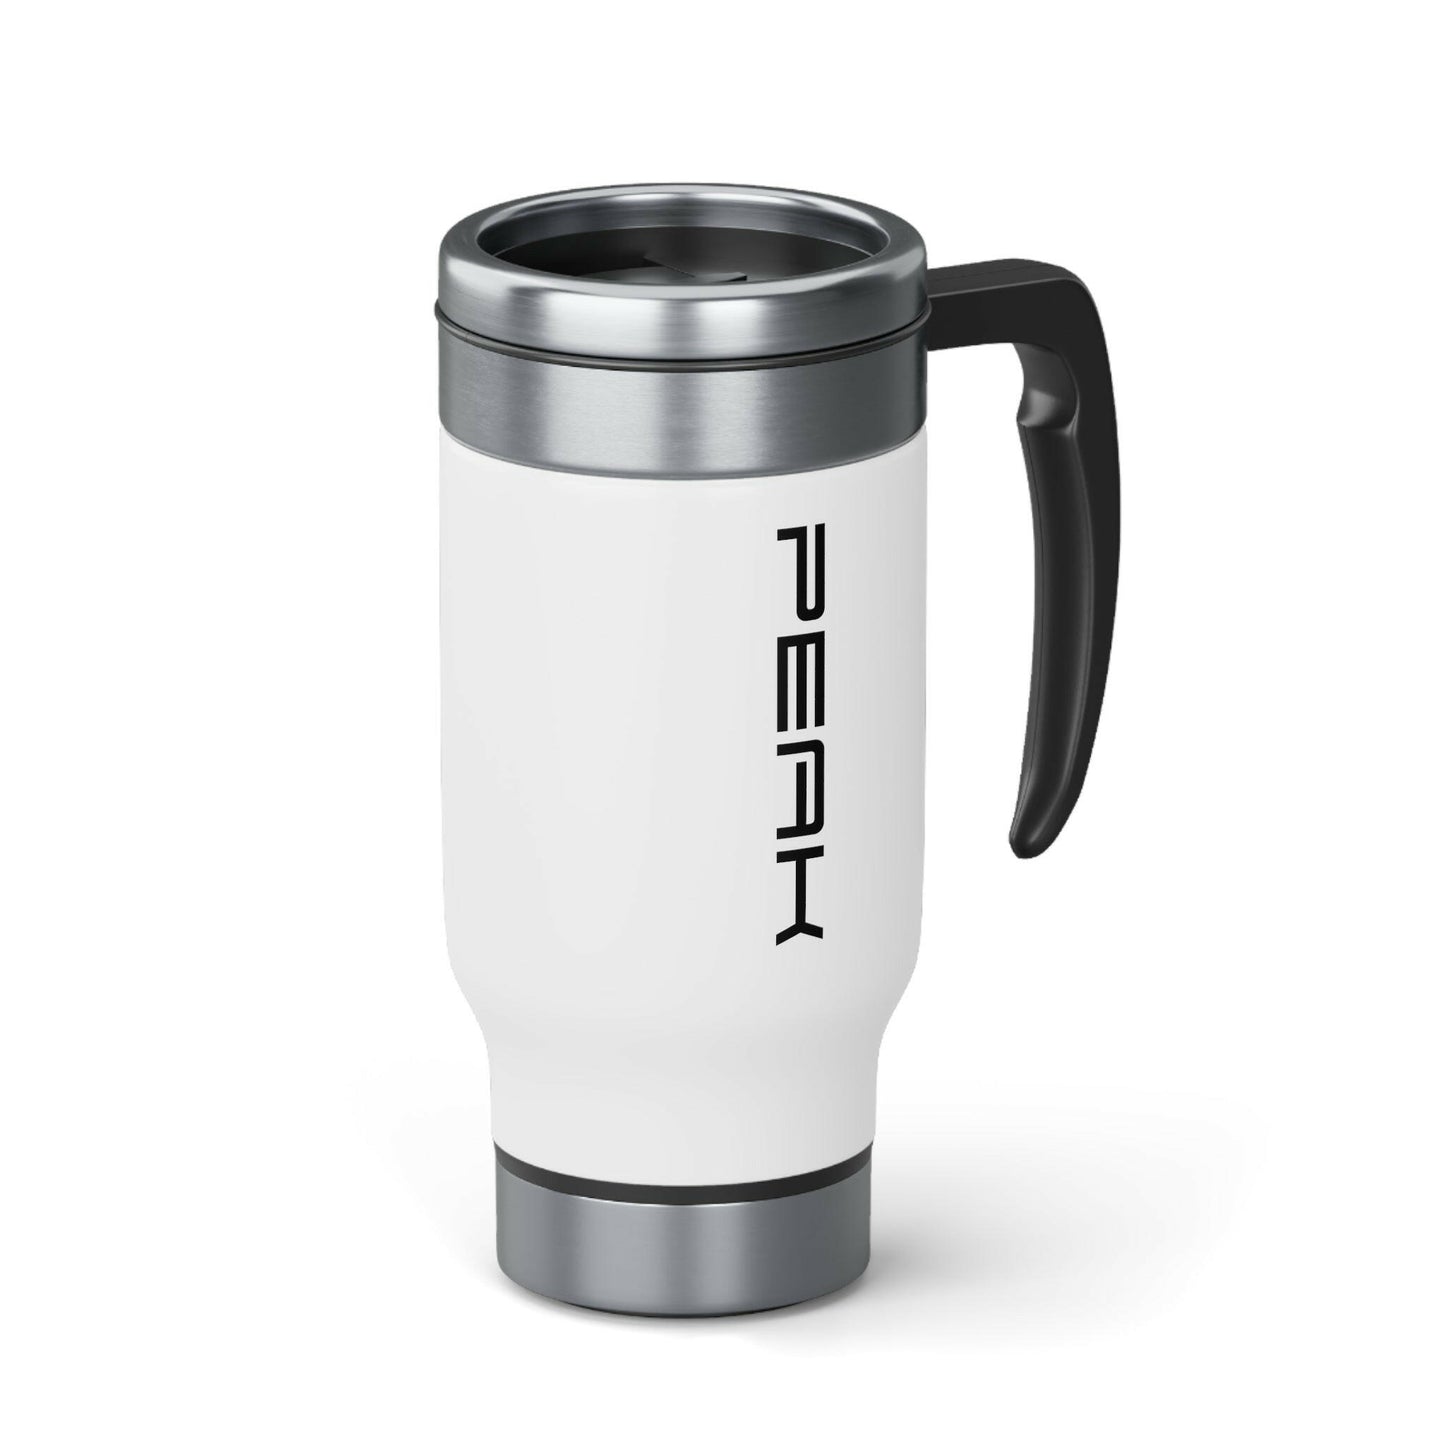 PEAK Stainless Steel Travel Mug with Handle, 415ml